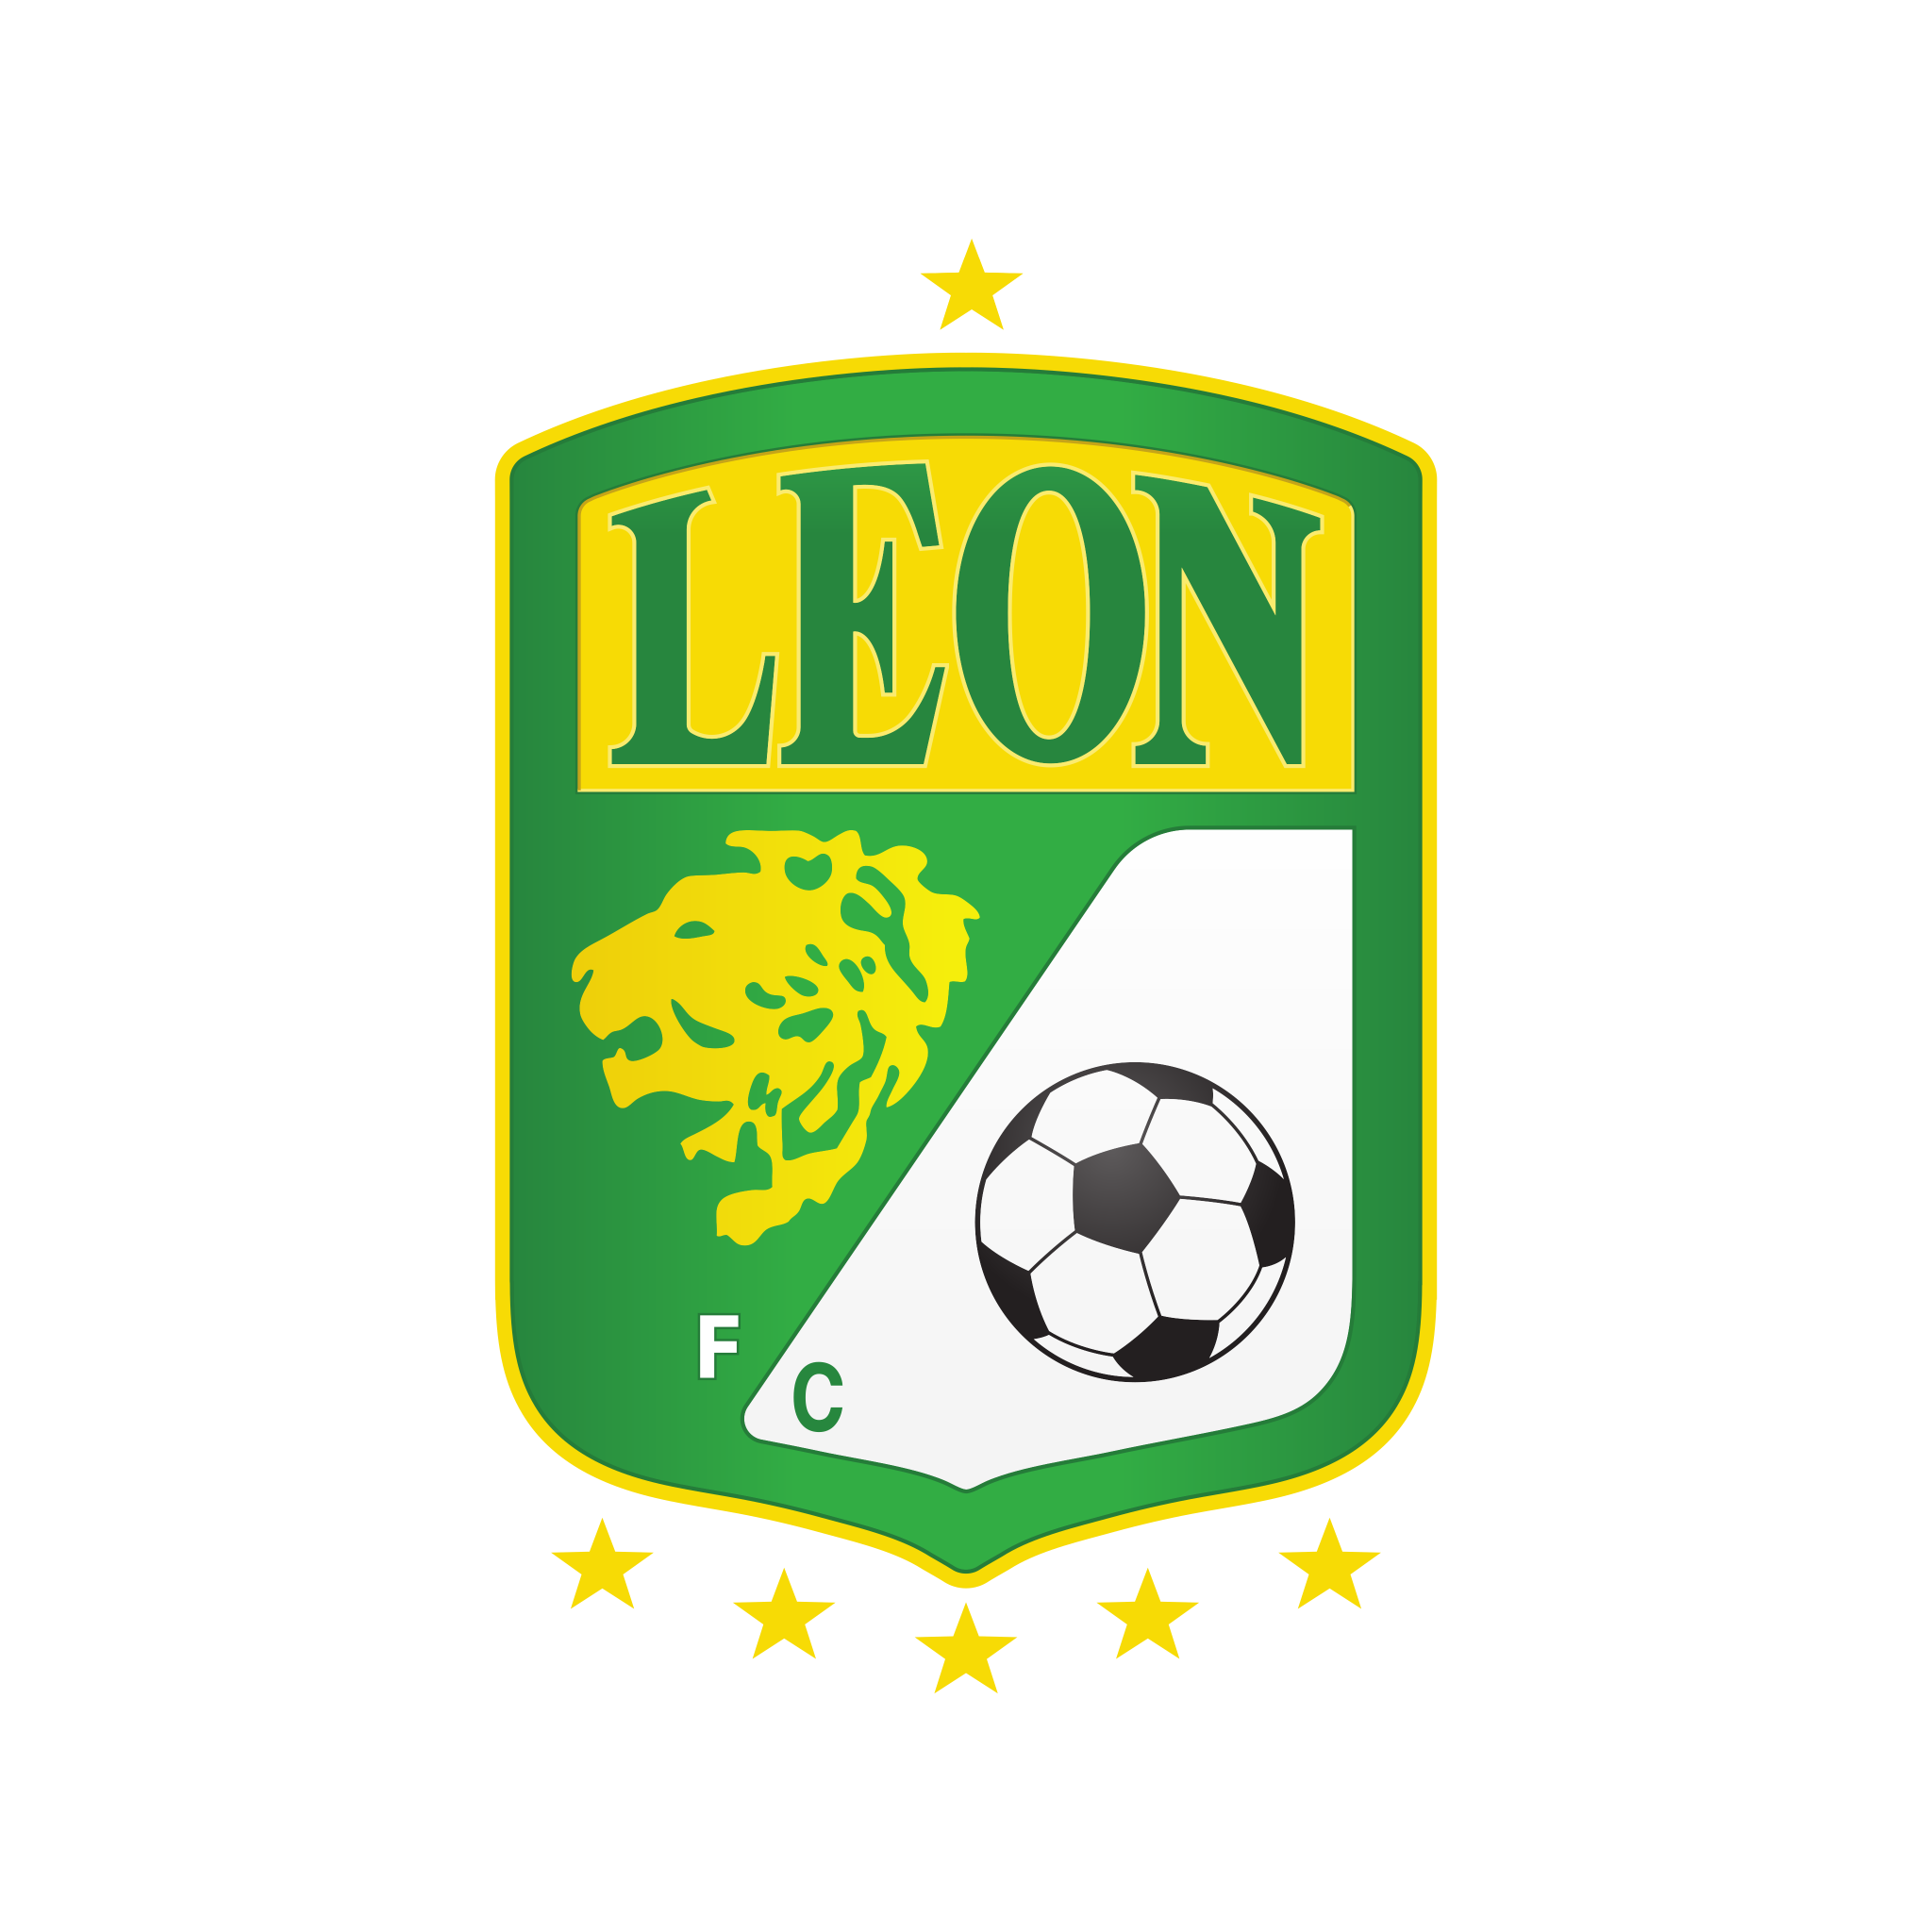 Logo de León FC SVG